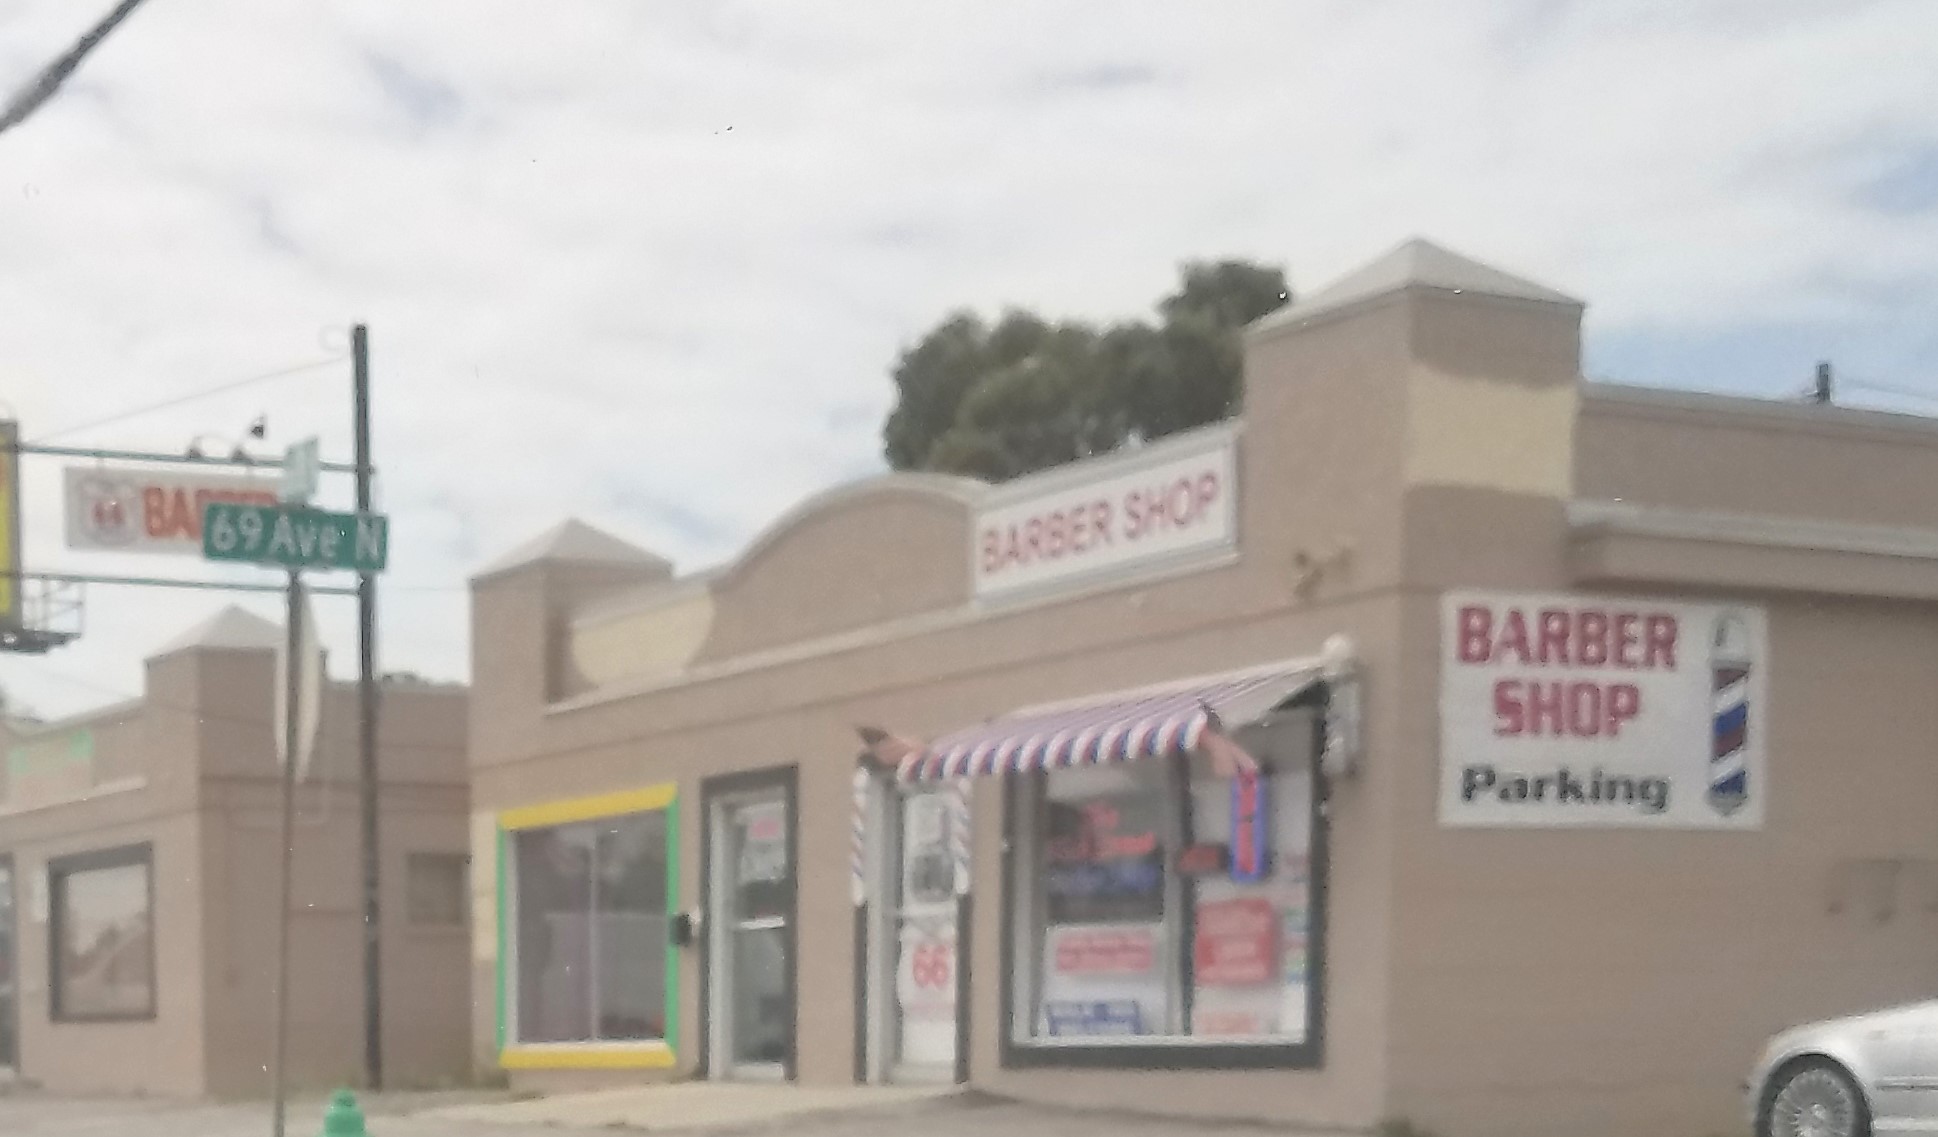 66th Street Barber Shop